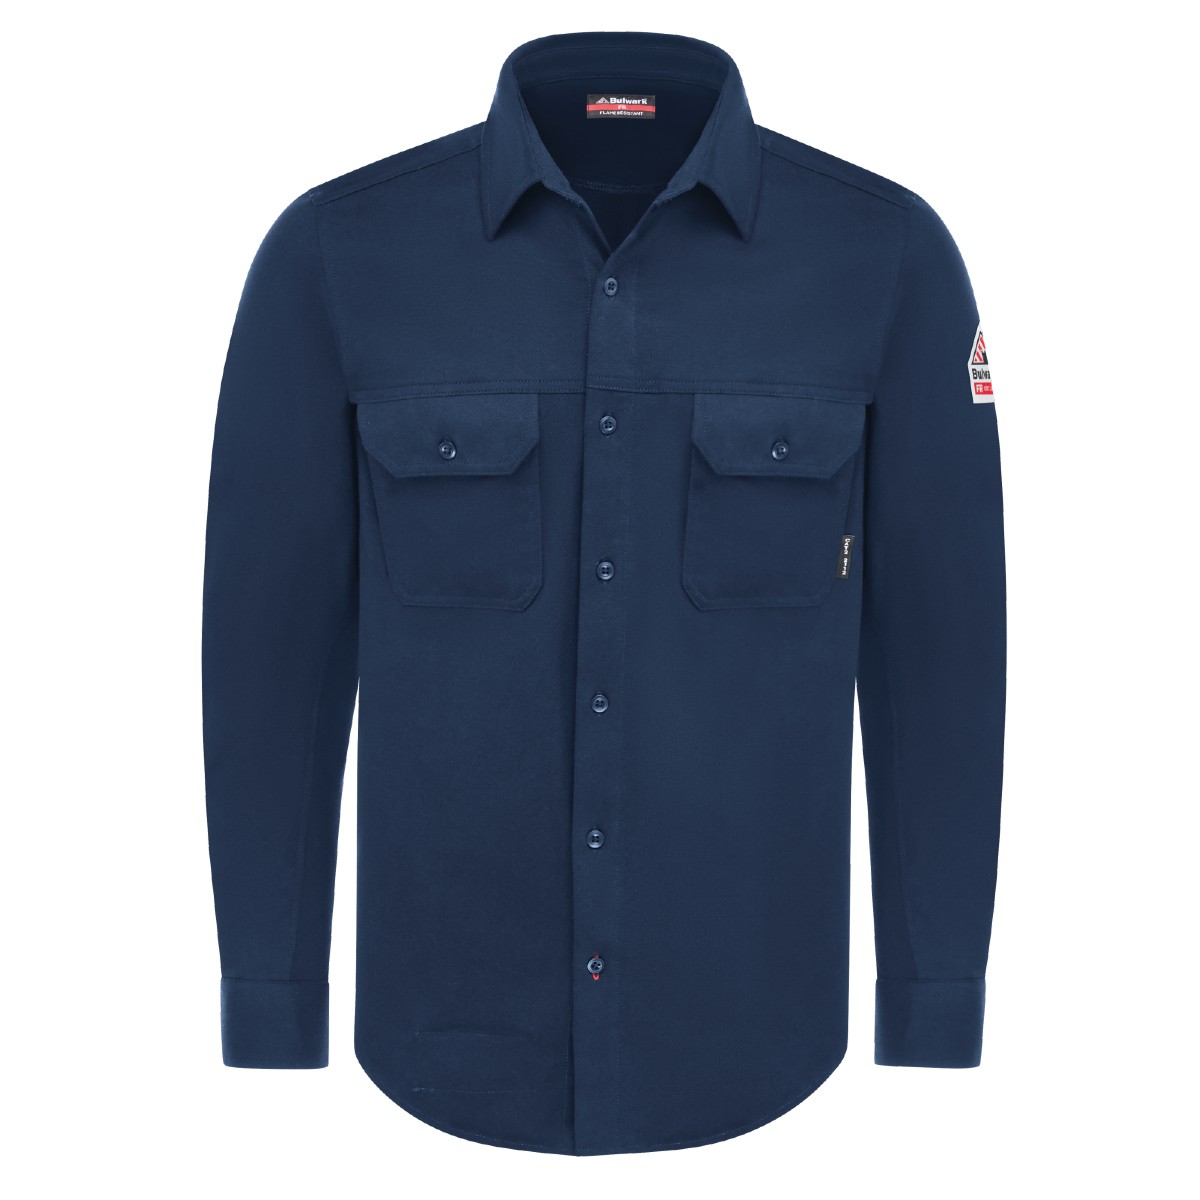 FR Flex Knit Button Down Shirt in Navy